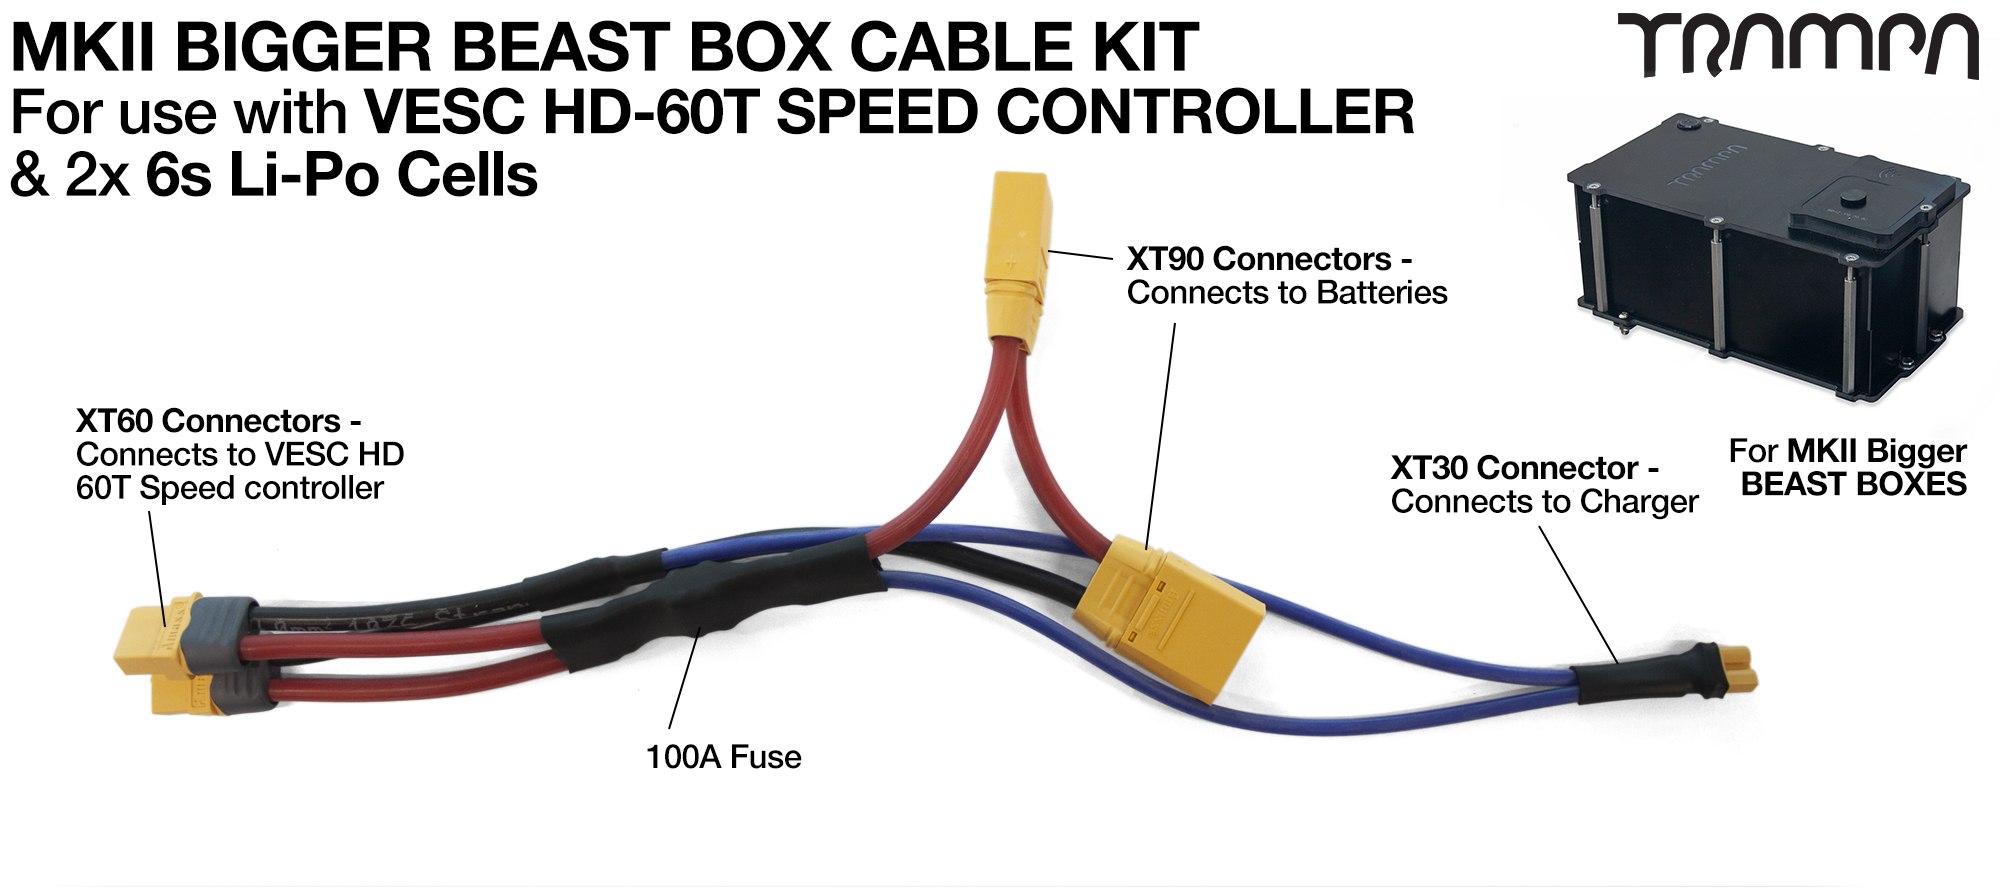 MKII Bigger BEAST BOX Cable Kit - used when fitting 1x VESC HD-60T & 2x 6sLi-Po Cells